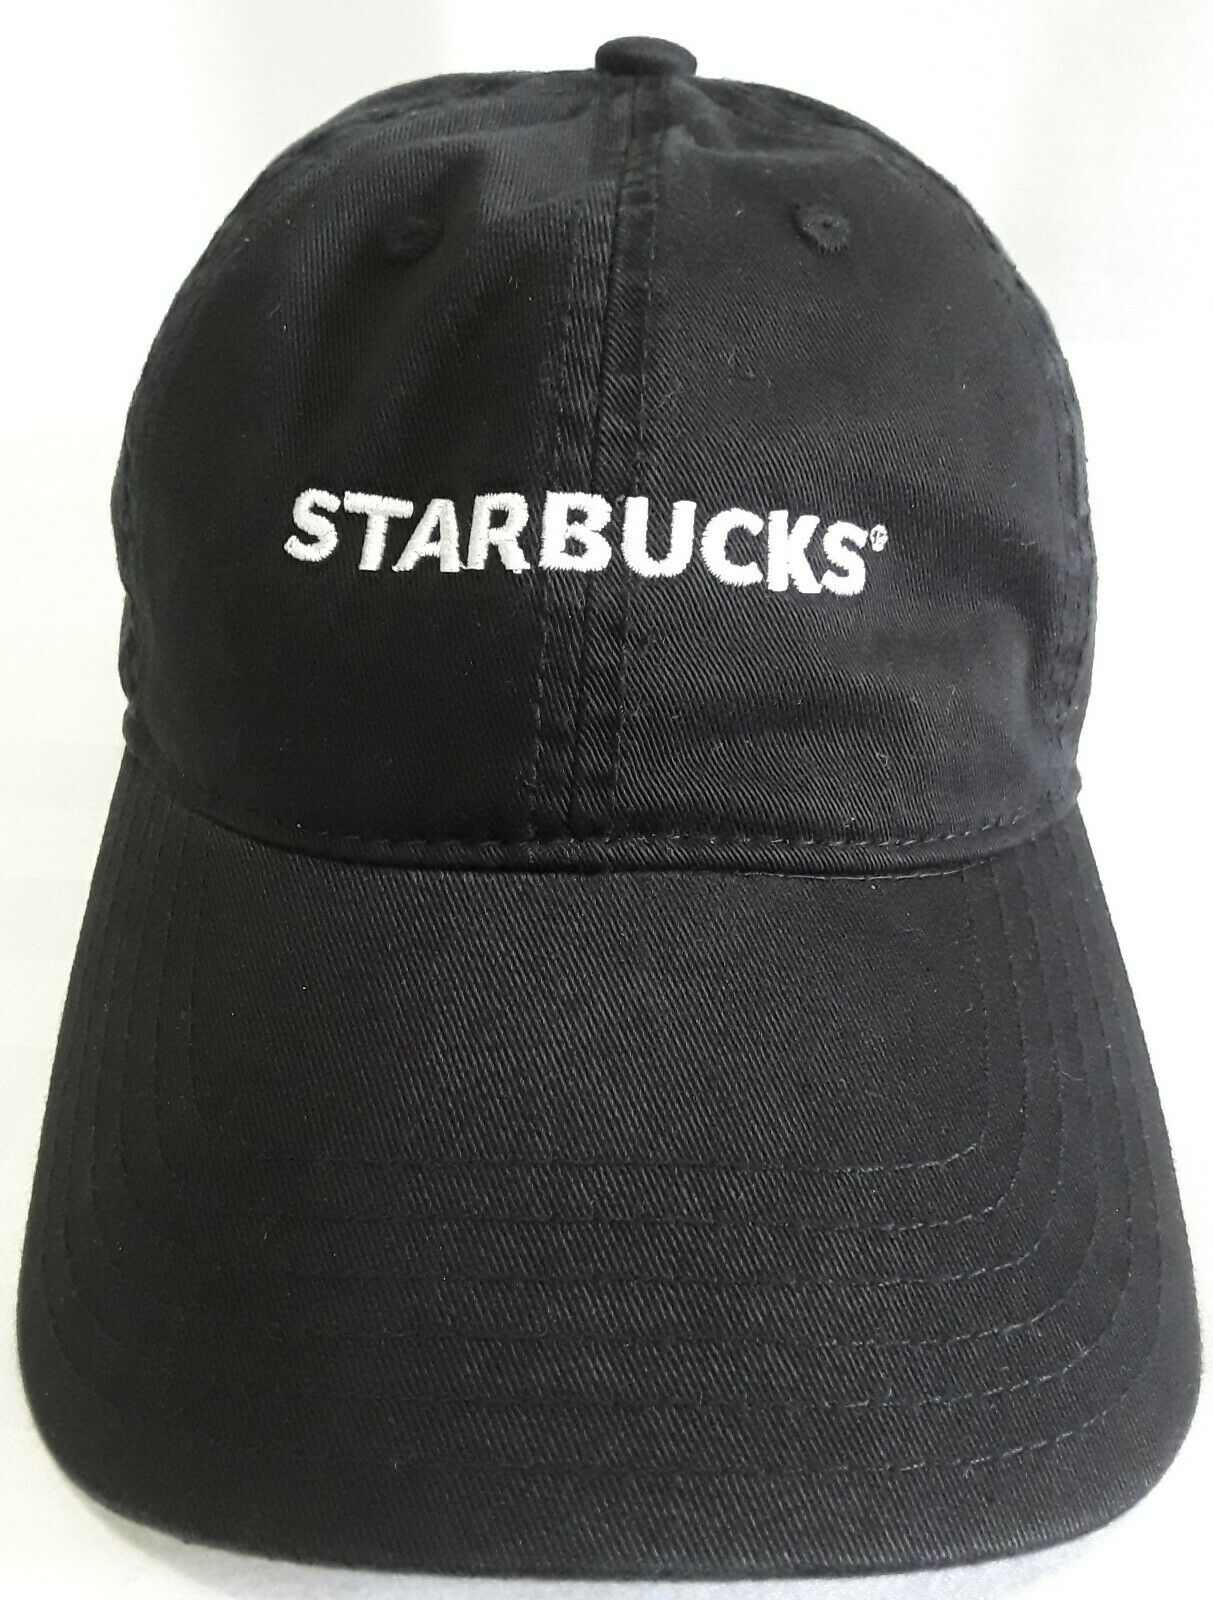 Starbucks Employee Worker Uniform Strapback Black White Script Hat Cap